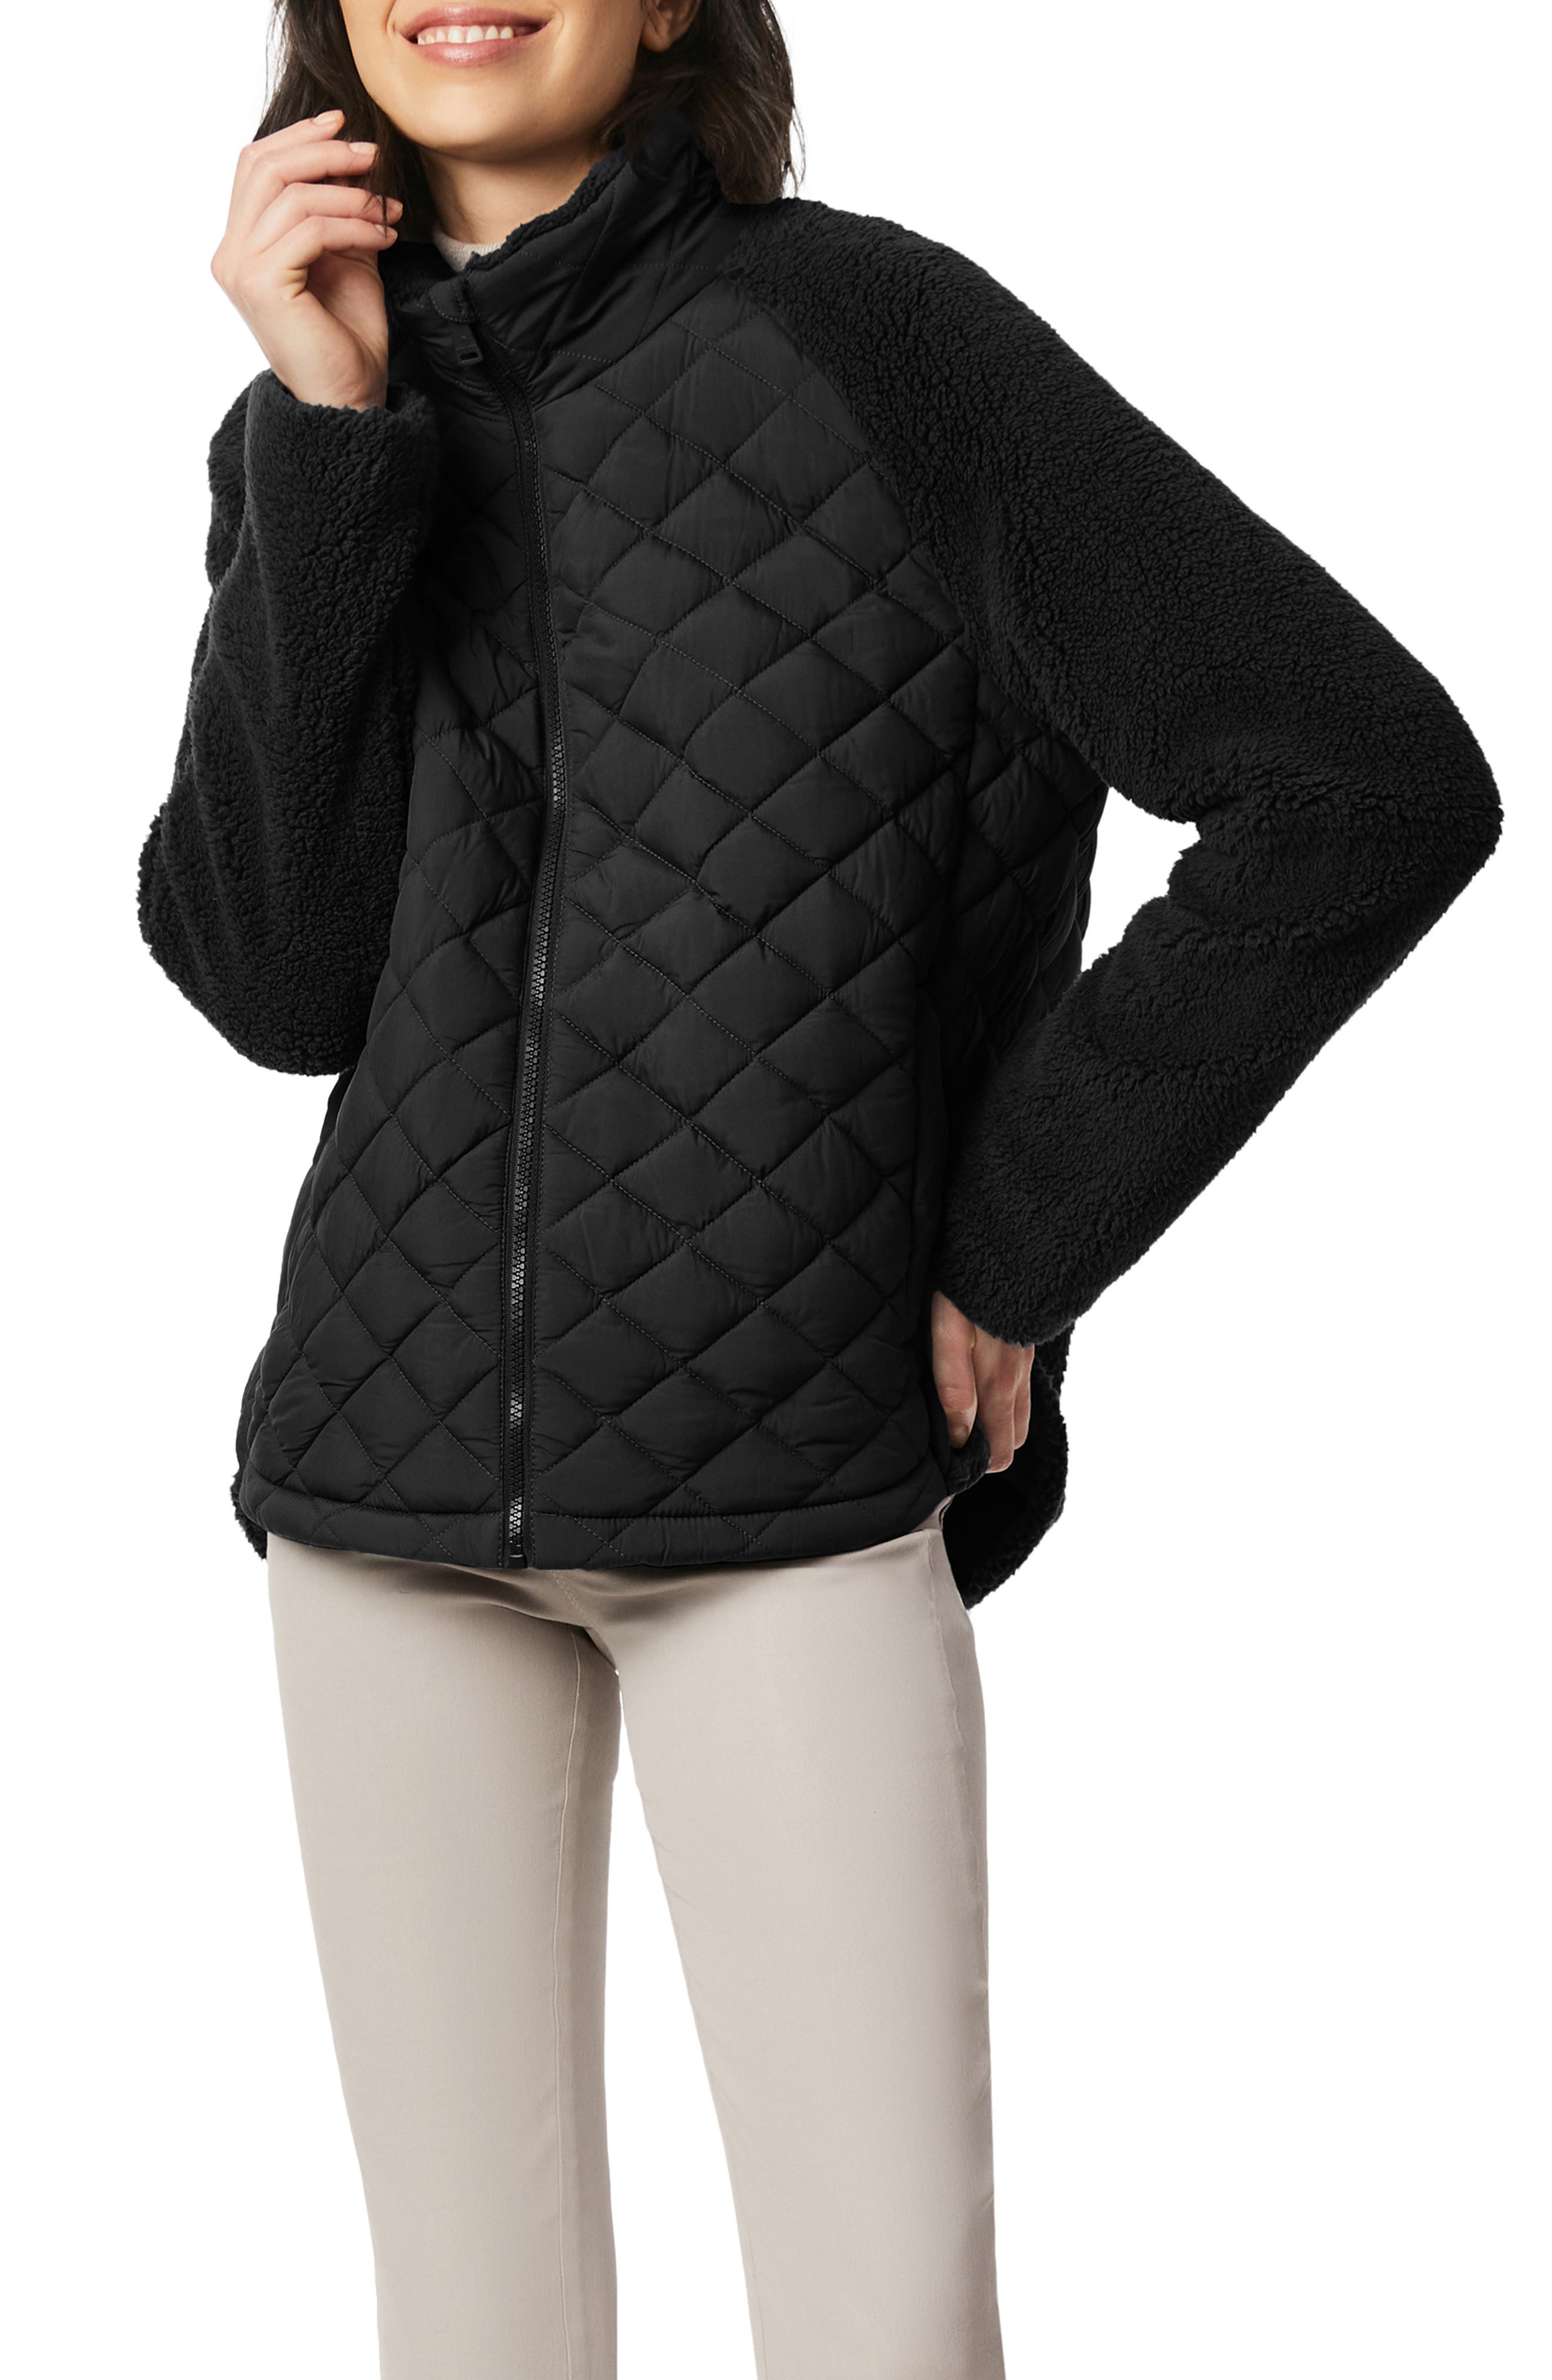 Women Fashion Hooded Jackets Long Cotton-Padded Pocket Faux Fur Coats Outerwear